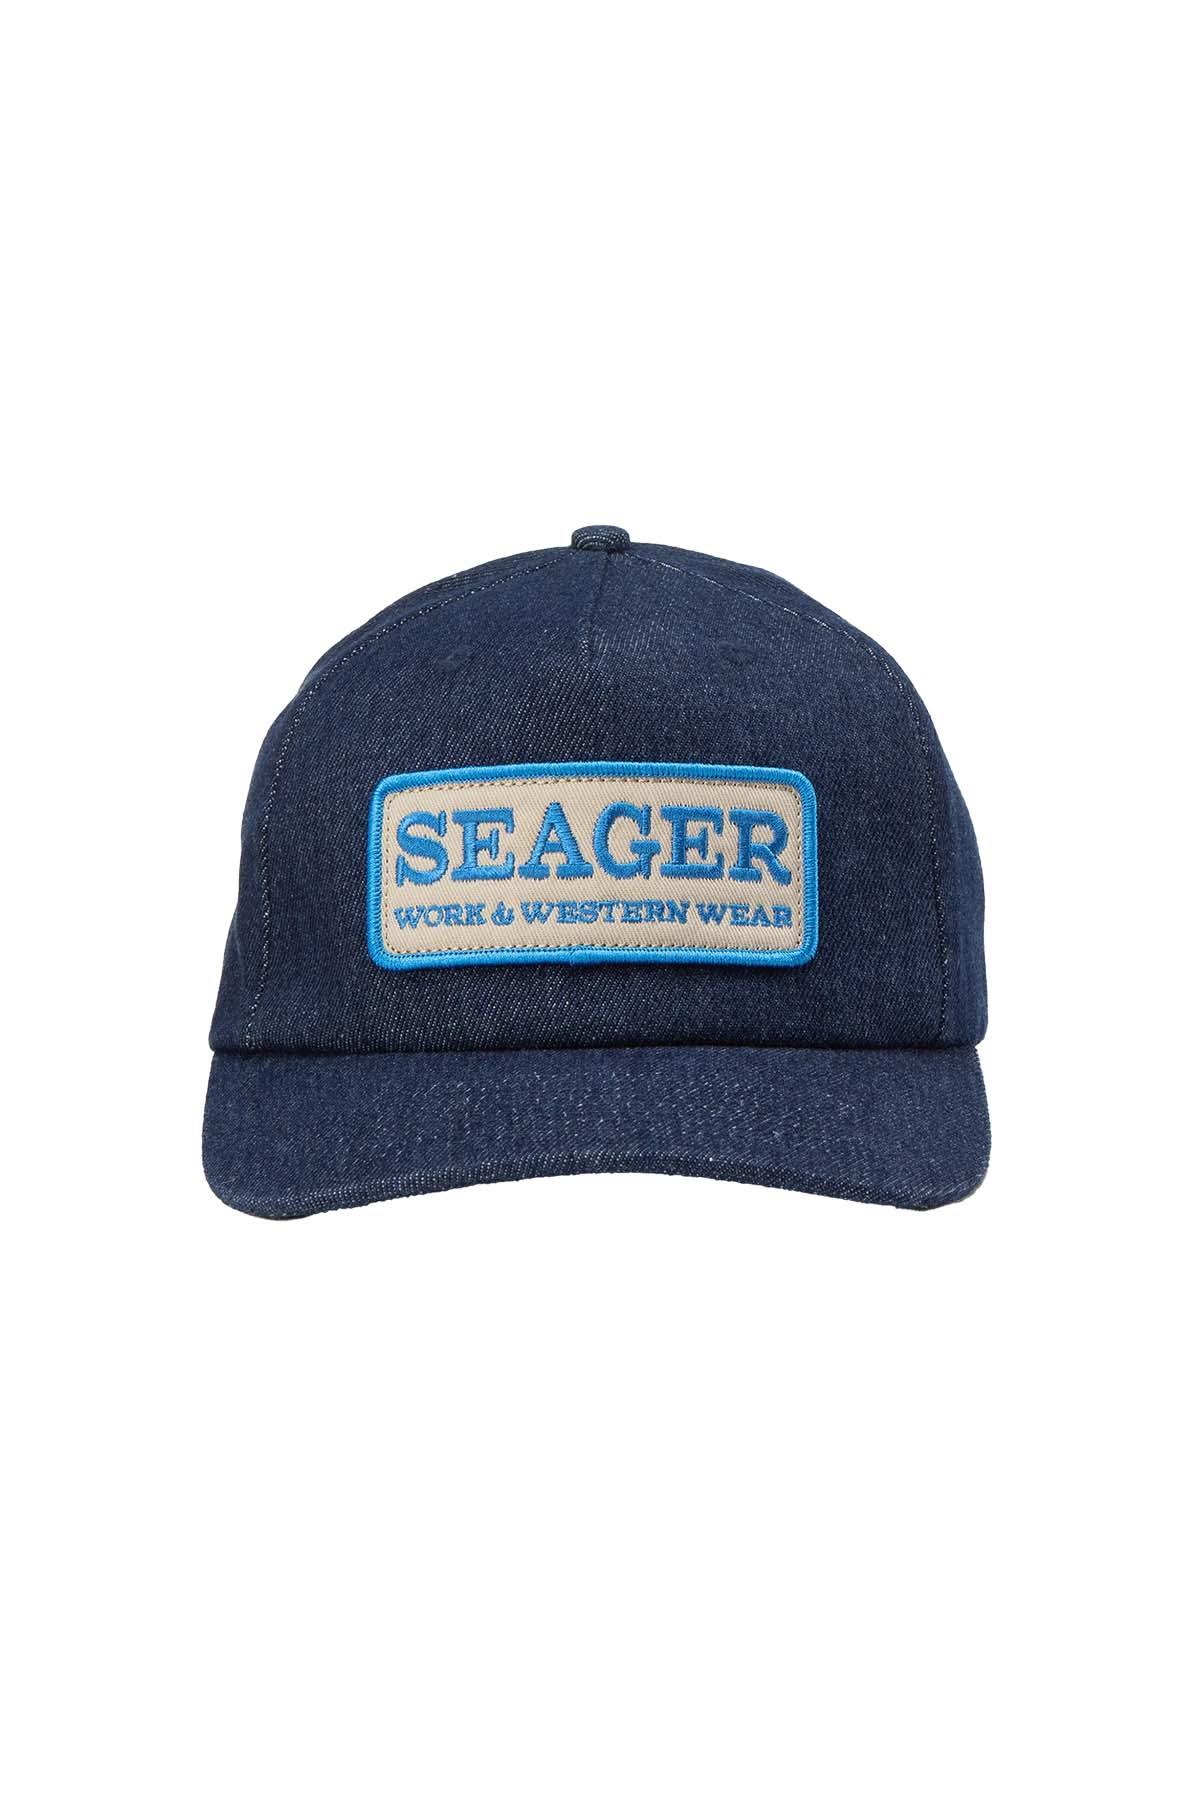 Seager - Farrier Snapback - Dark Blue - Front